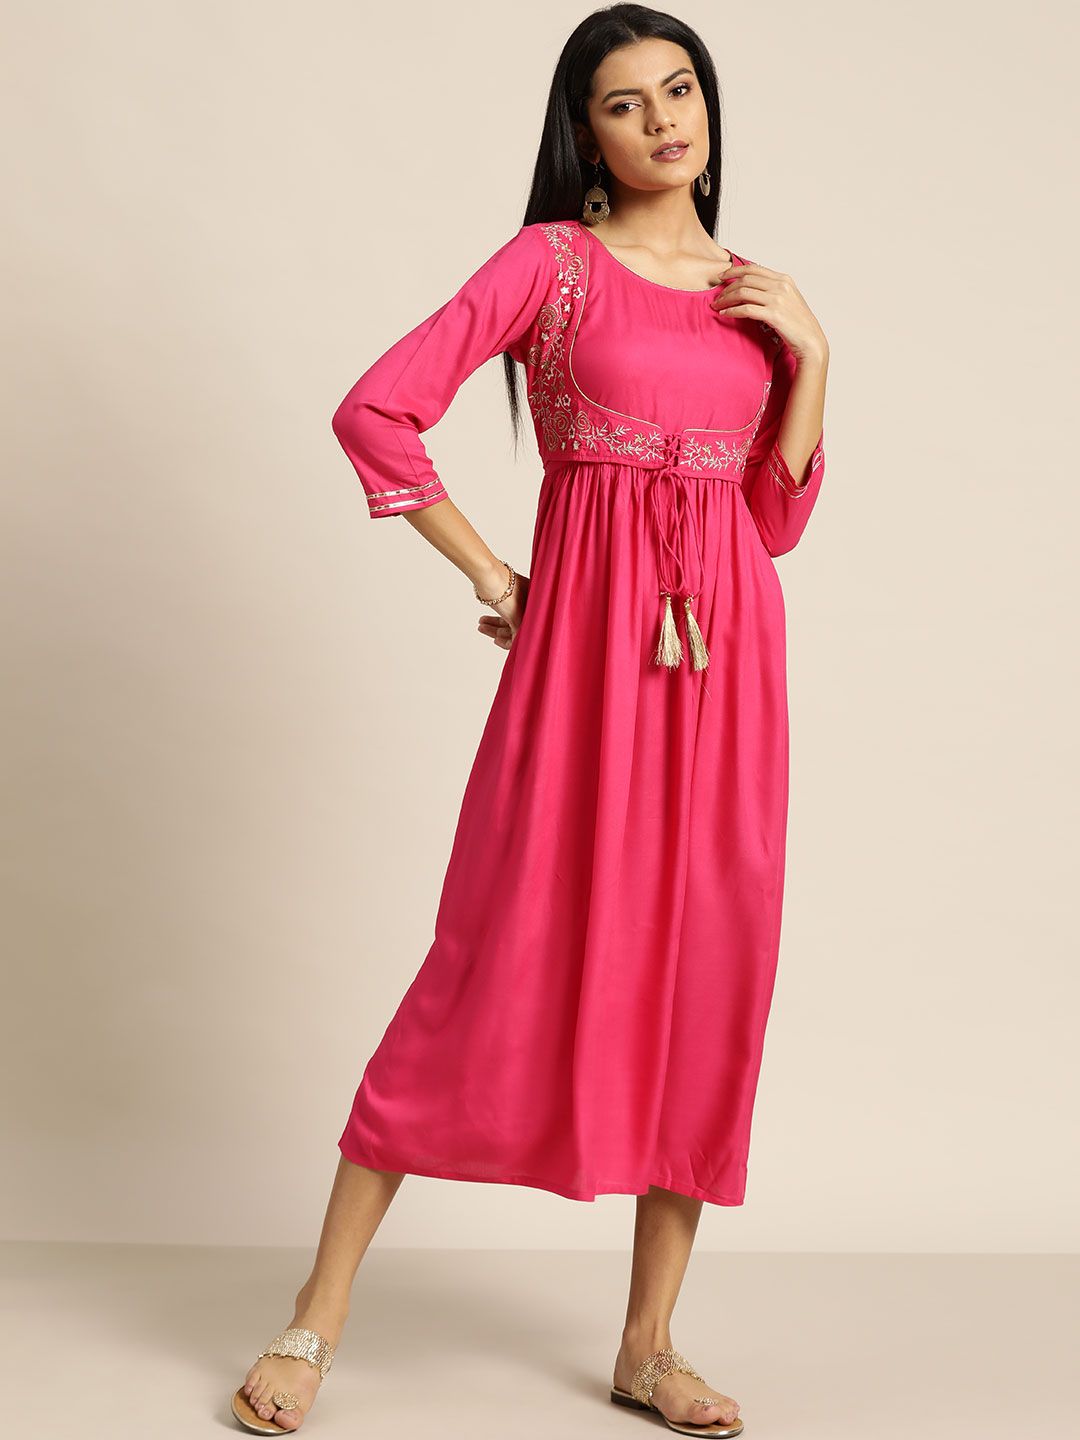 Shae by SASSAFRAS Pink Zari Embroidered Detail Layered Liva A-Line Midi Dress Price in India